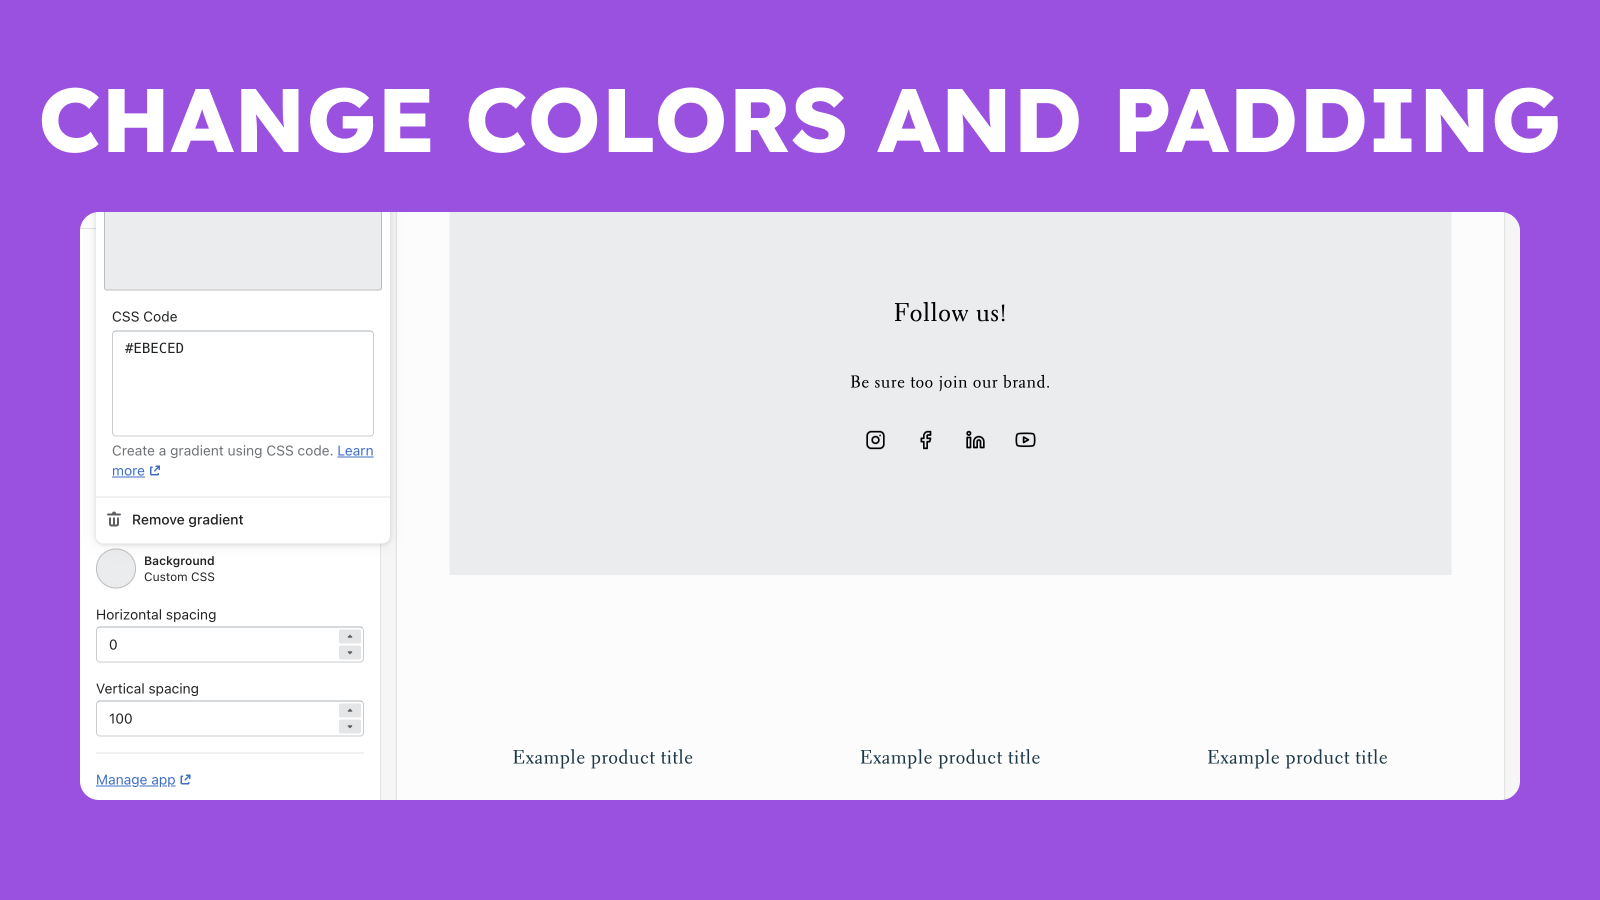 Floox Social Networks Easy app - Farve og polstring management